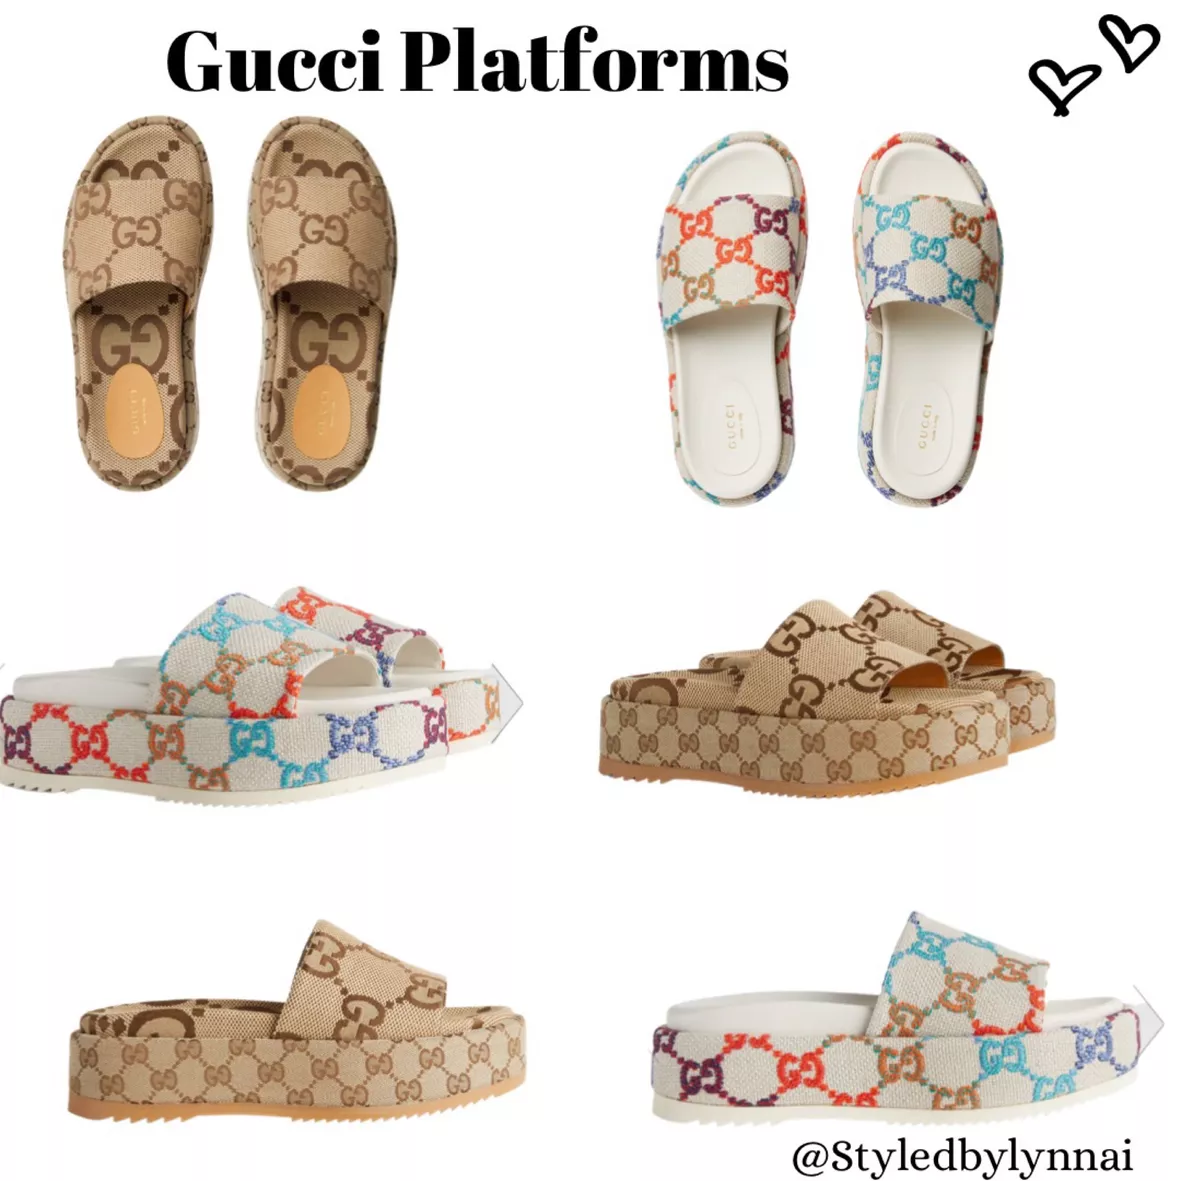 gucci platform slides outfit